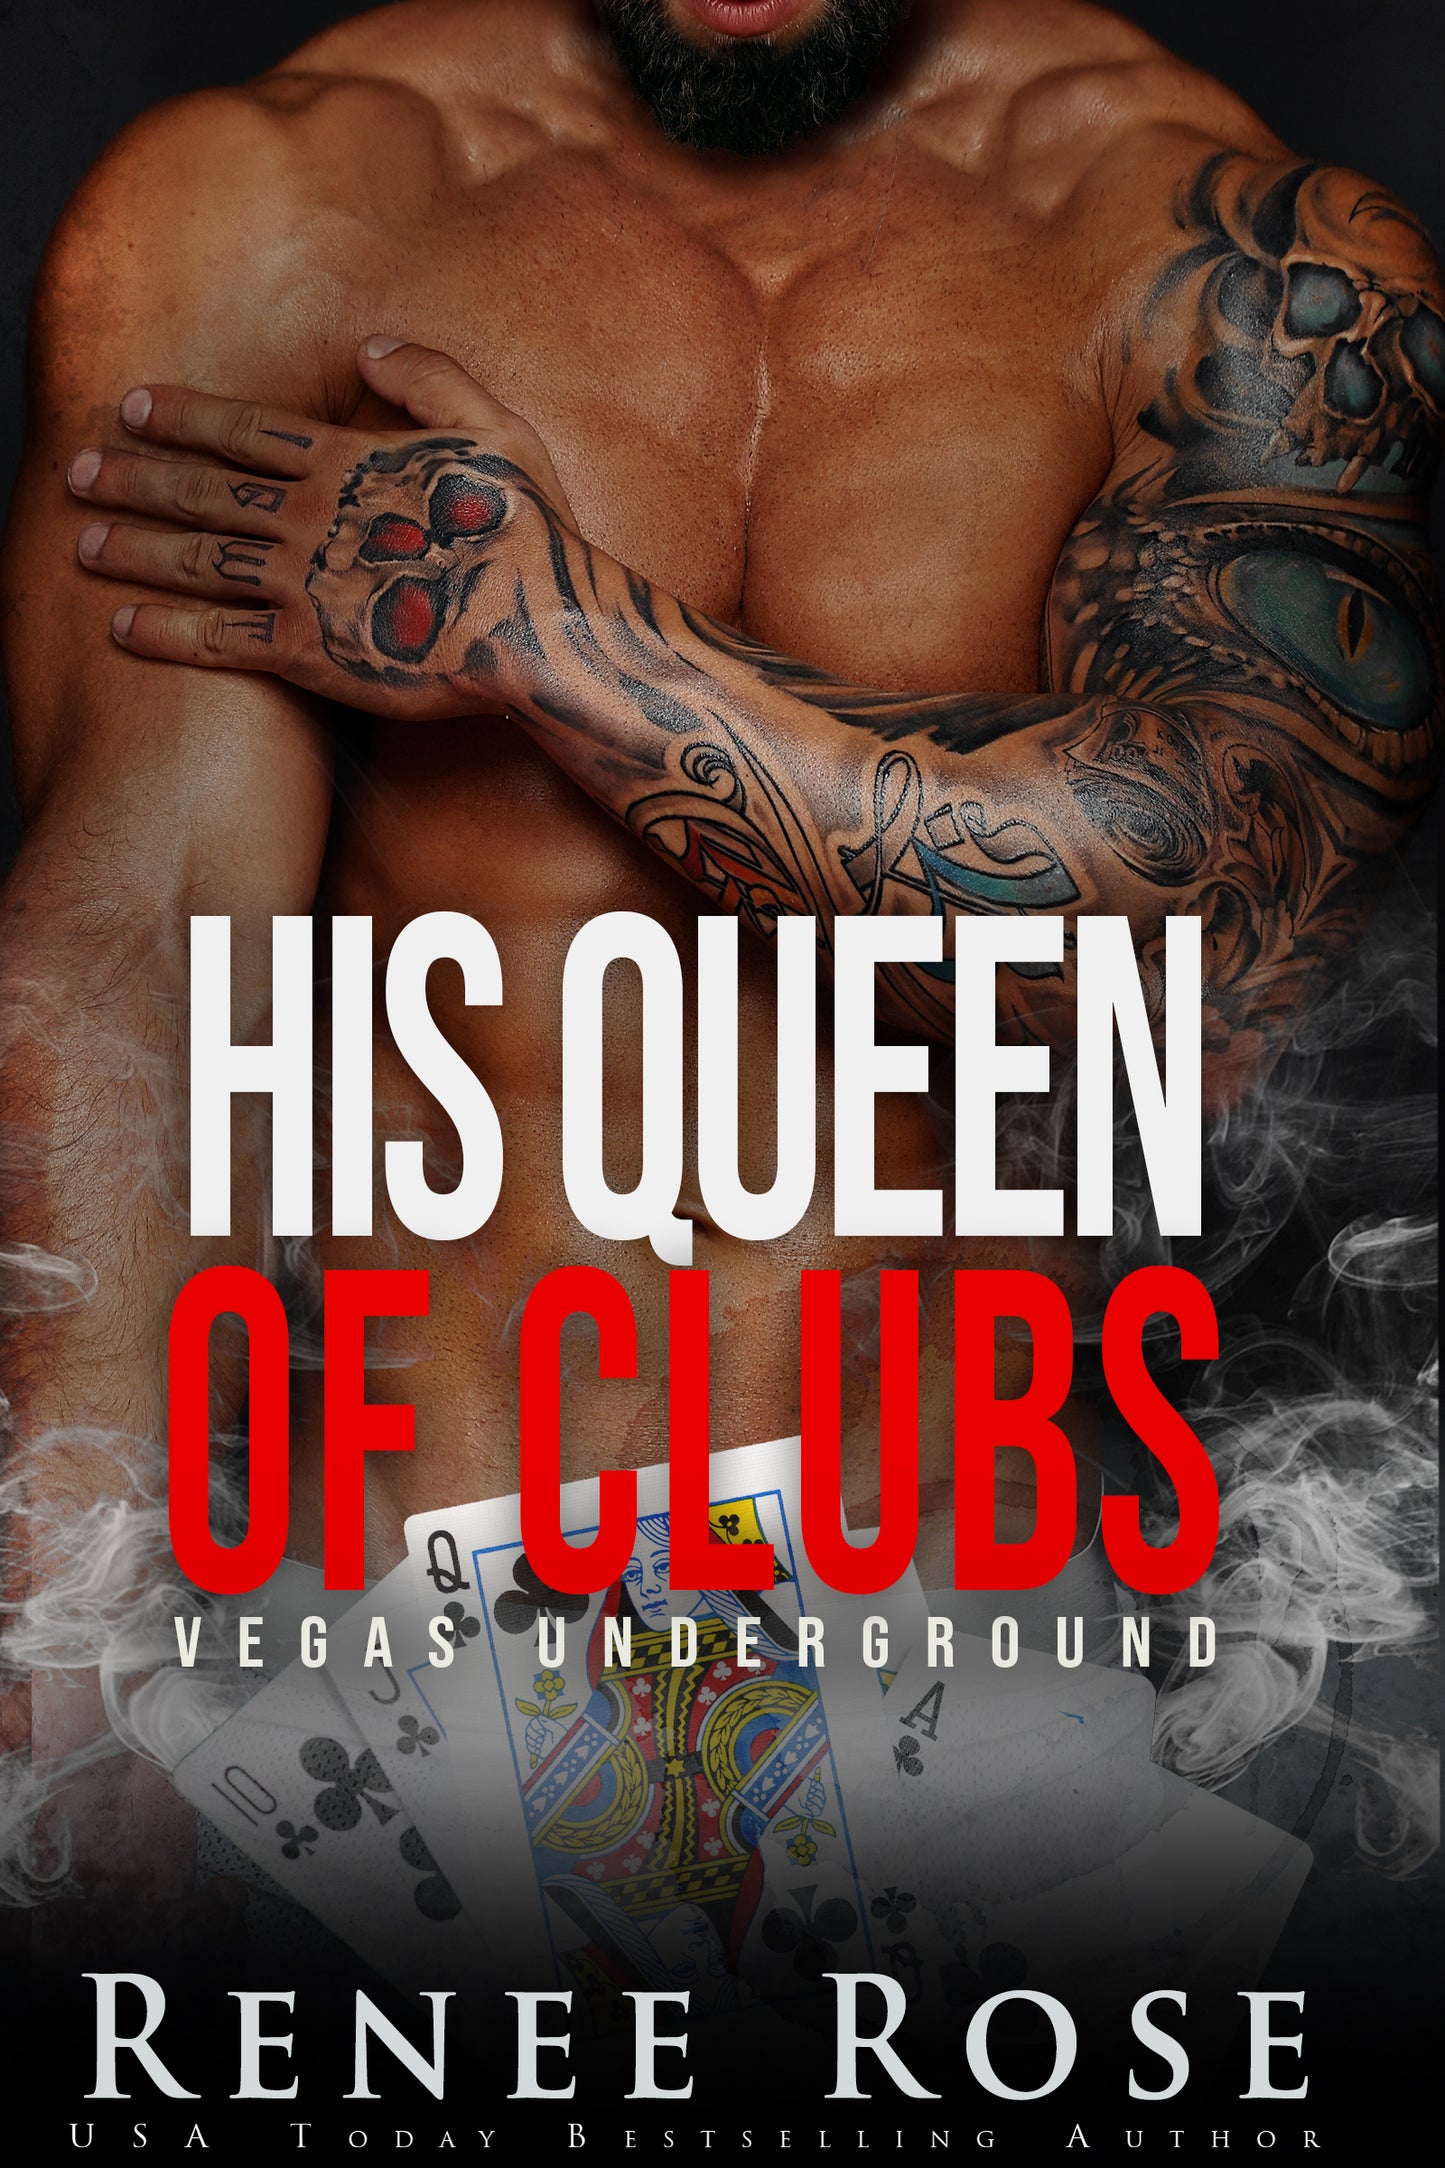 Vegas Underground E-Book 6: His Queen of Clubs